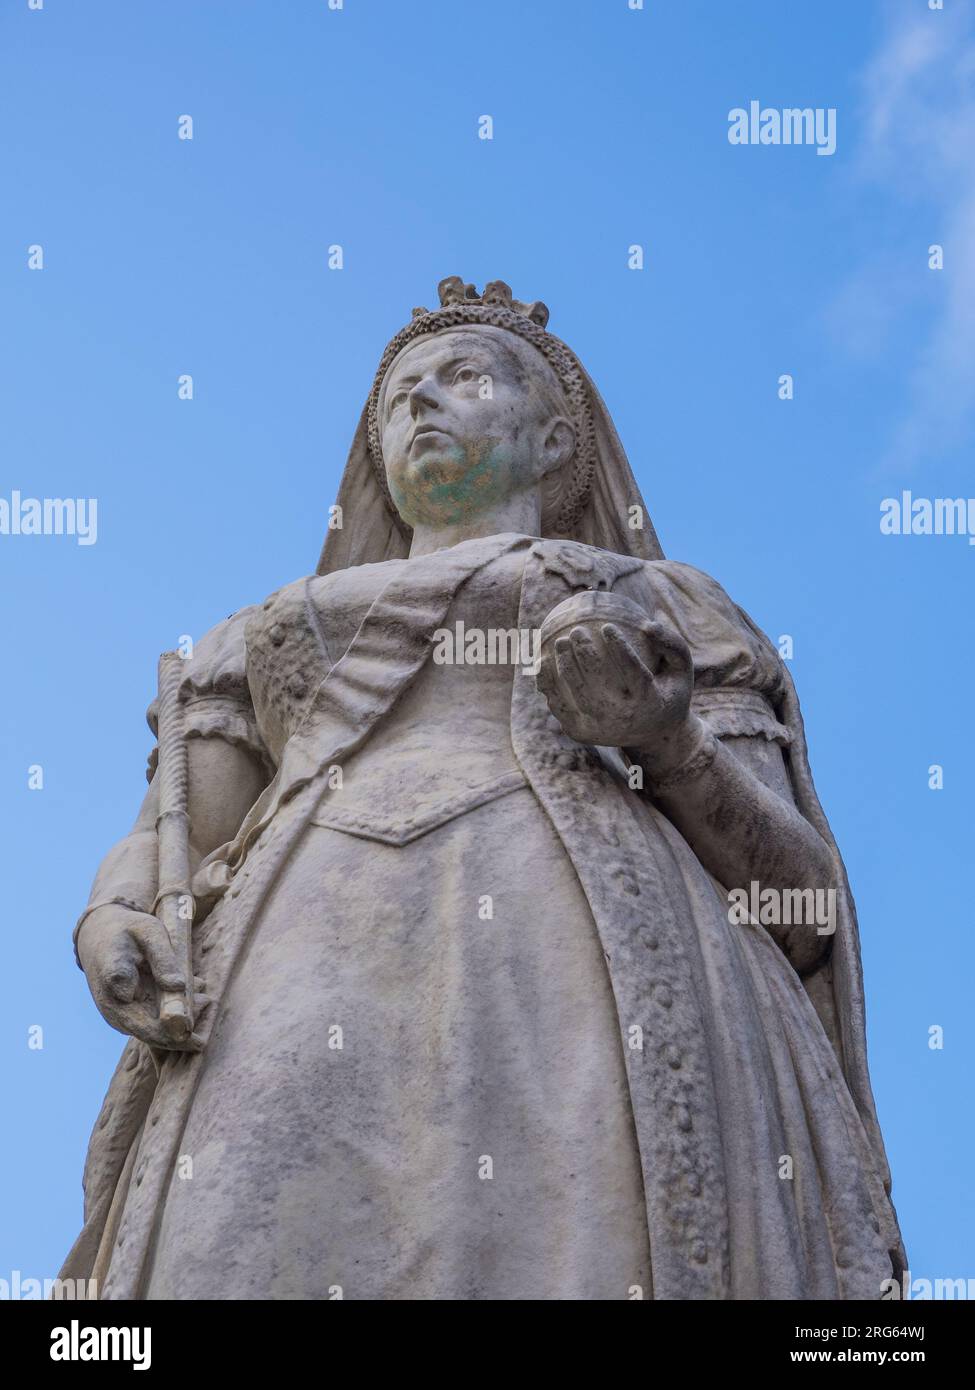 Queen Victoria statue, Reading, Berkshire, England, UK, GB. Stock Photo